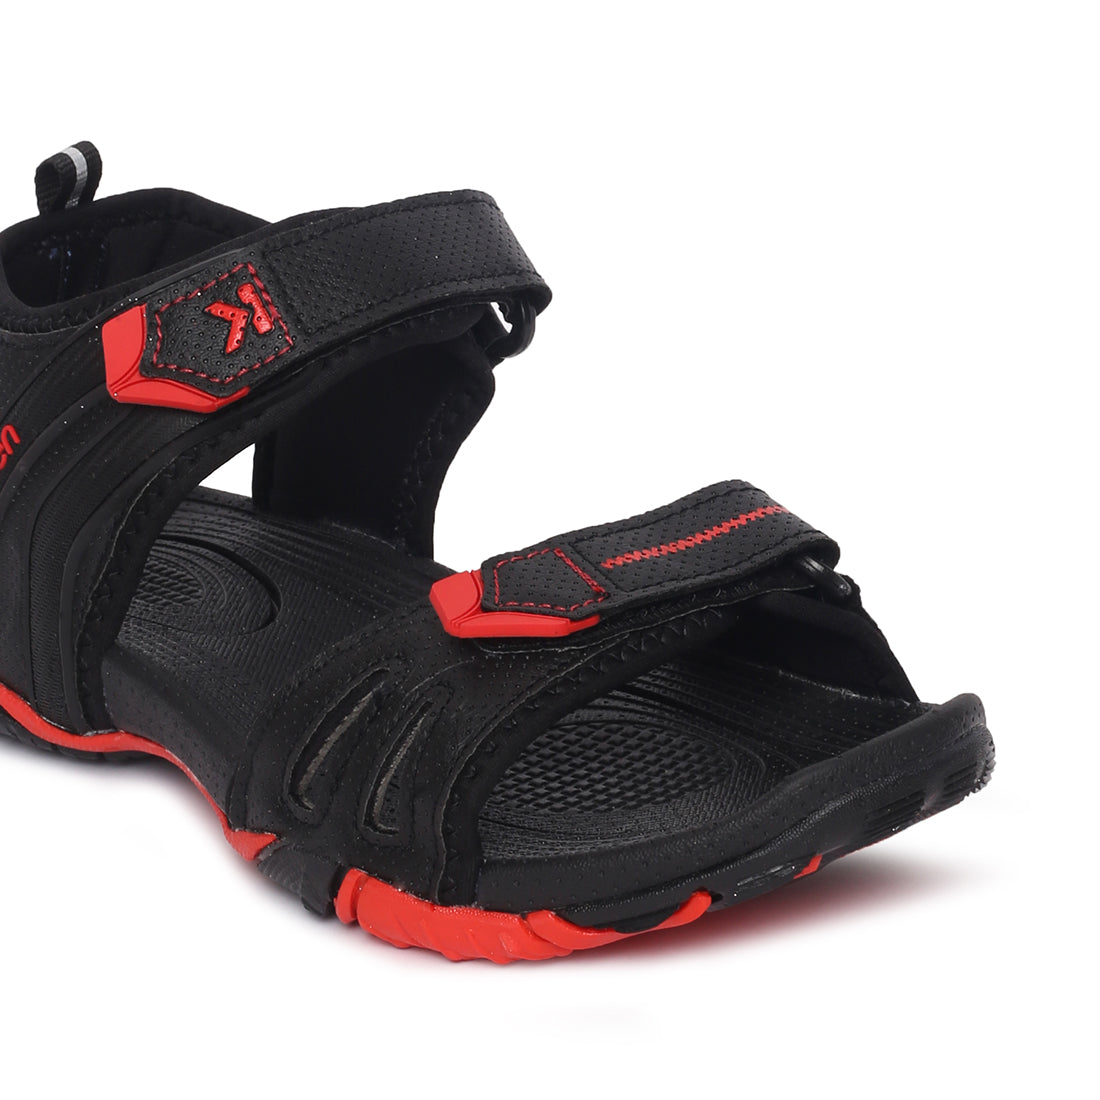 Eeken ESDGO4501 Black Stylish Lightweight Dailywear Sports Sandals For Men